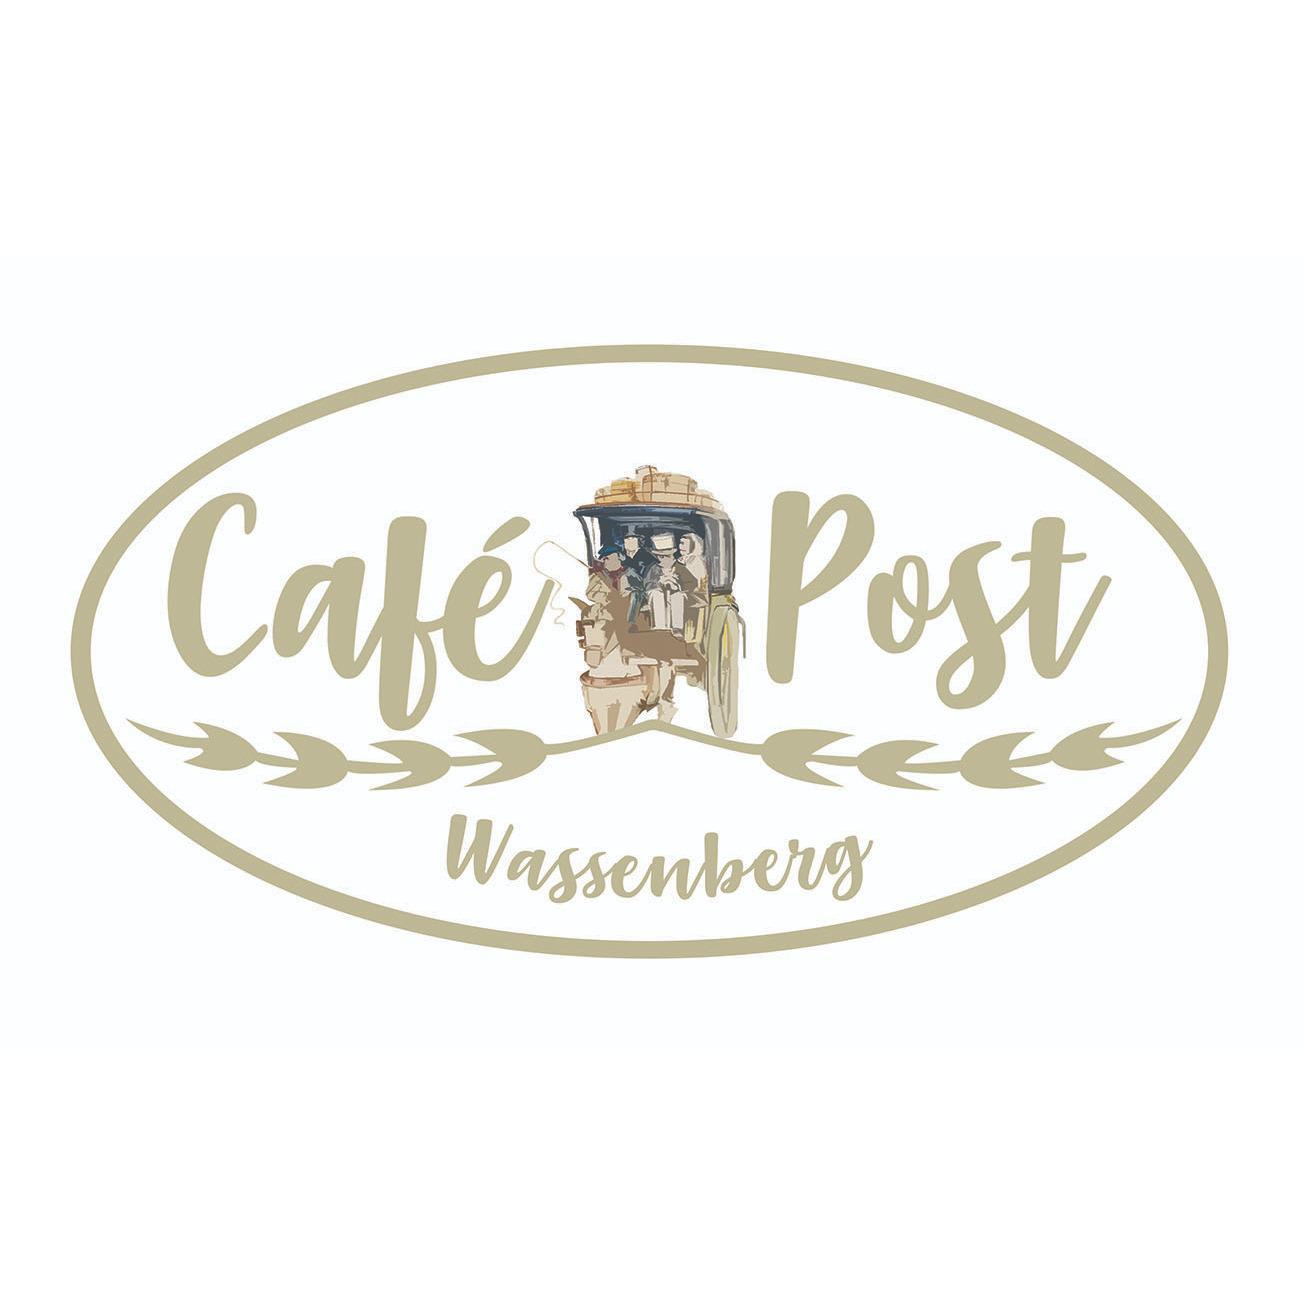 Café Post in Wassenberg - Logo